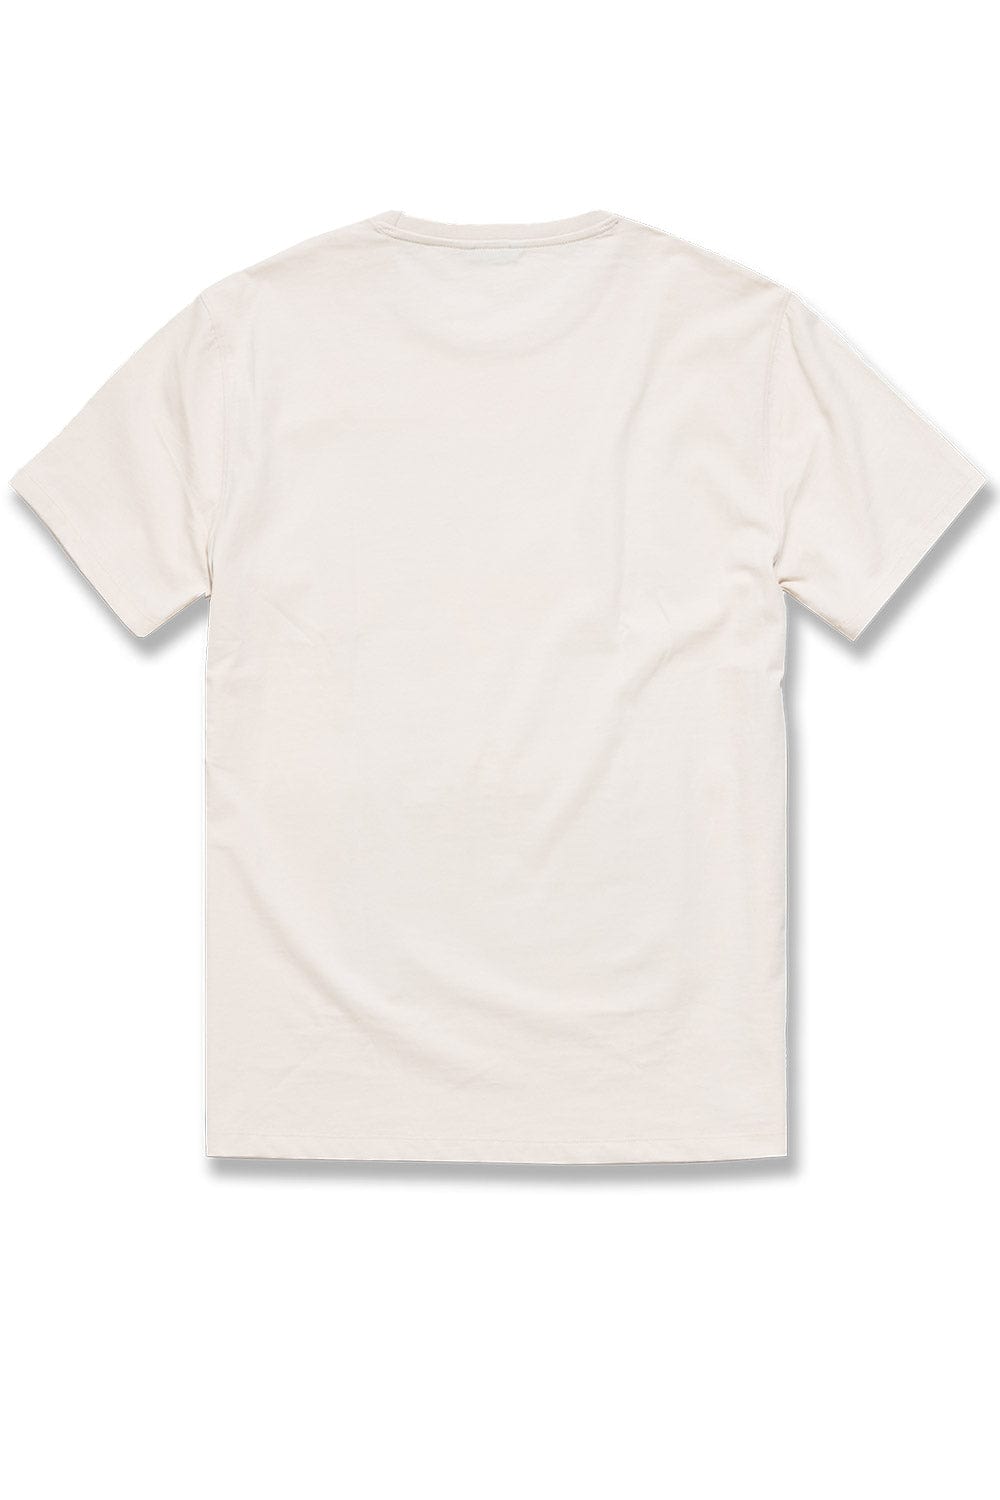 Jordan Craig Wrecked T-Shirt (Medusa)